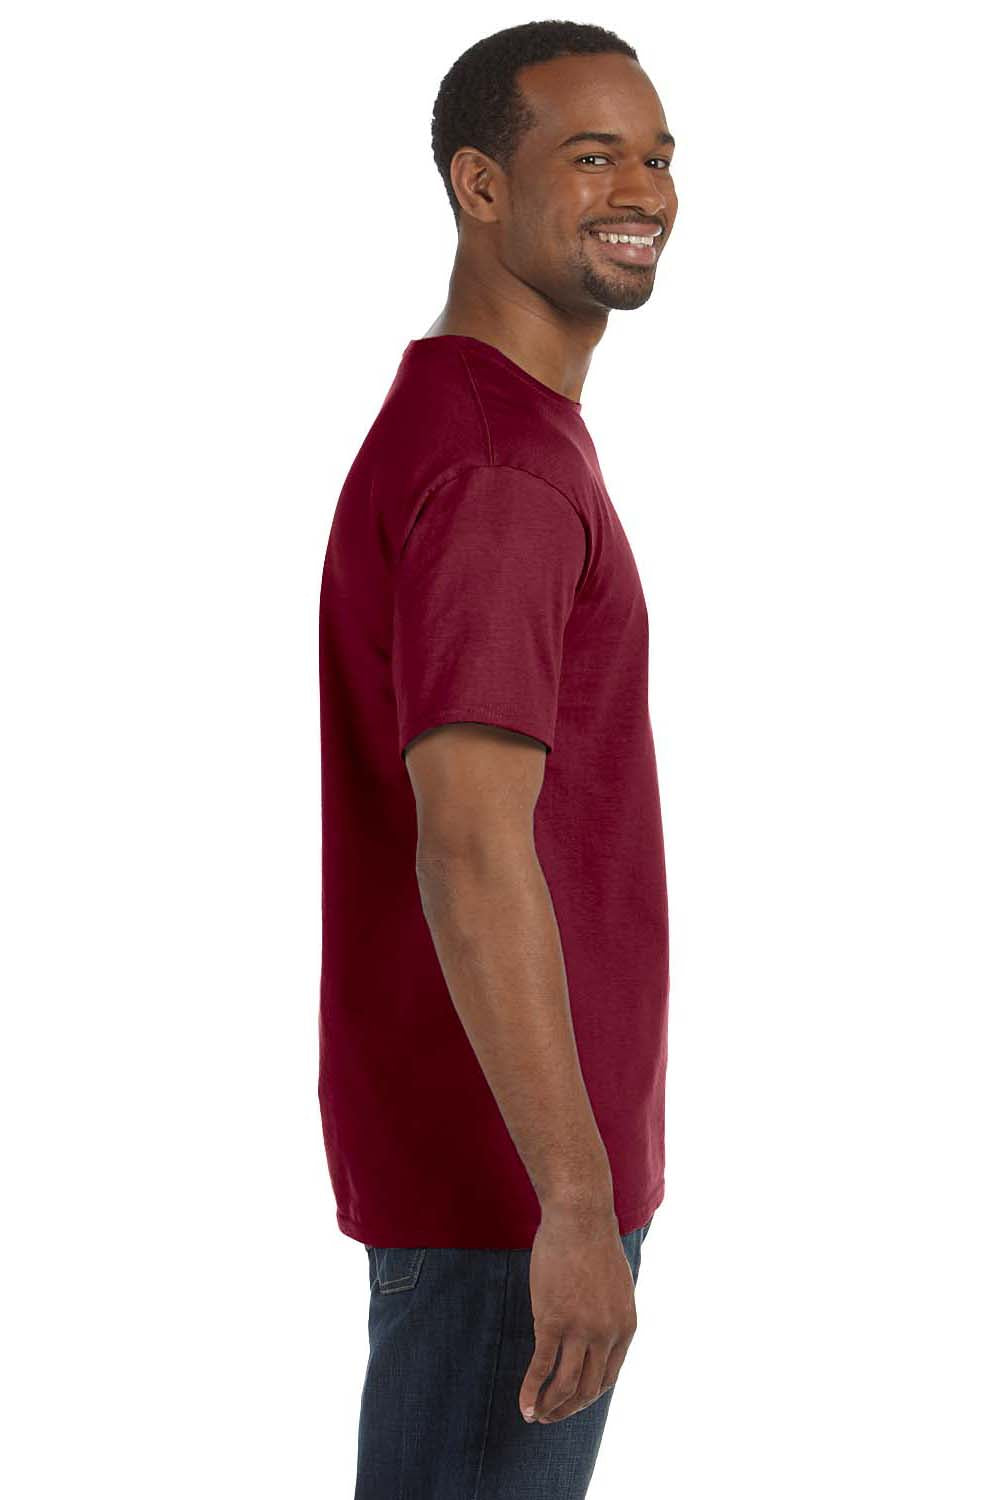 Hanes 5250T Mens ComfortSoft Short Sleeve Crewneck T-Shirt Cardinal Red Side